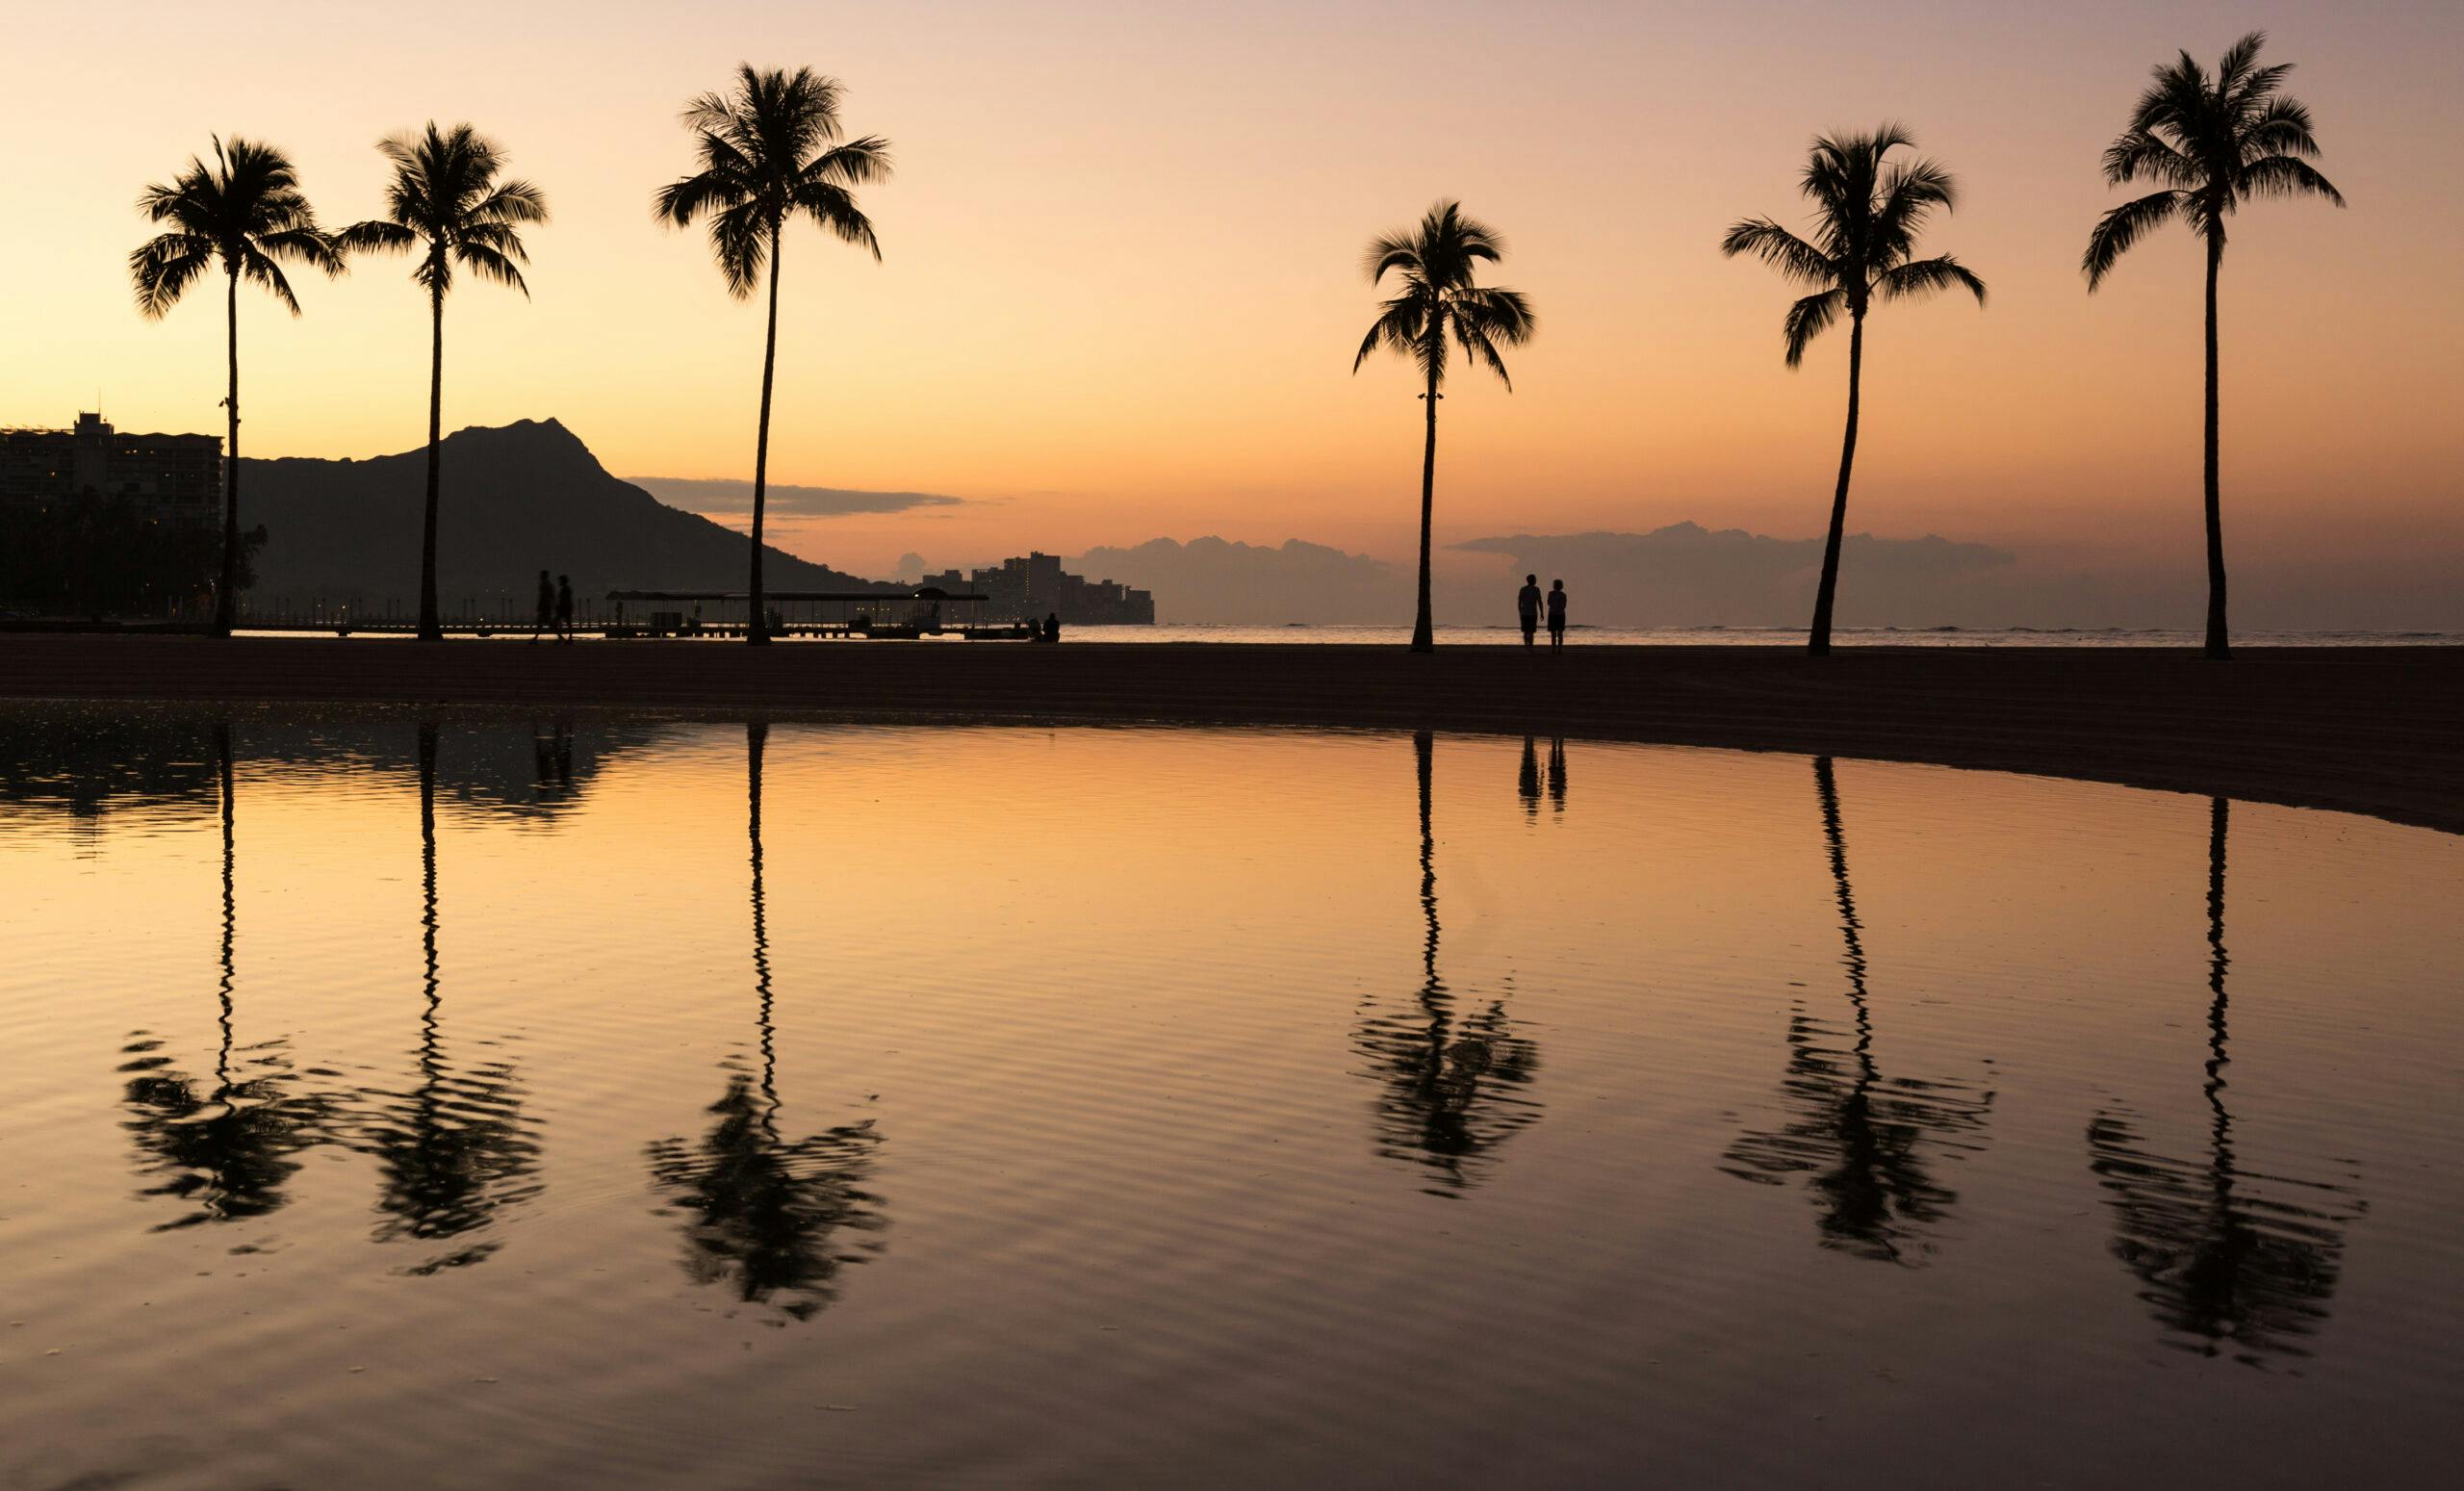 Sunrise over ocean with palm trees in Waikiki Hawaii